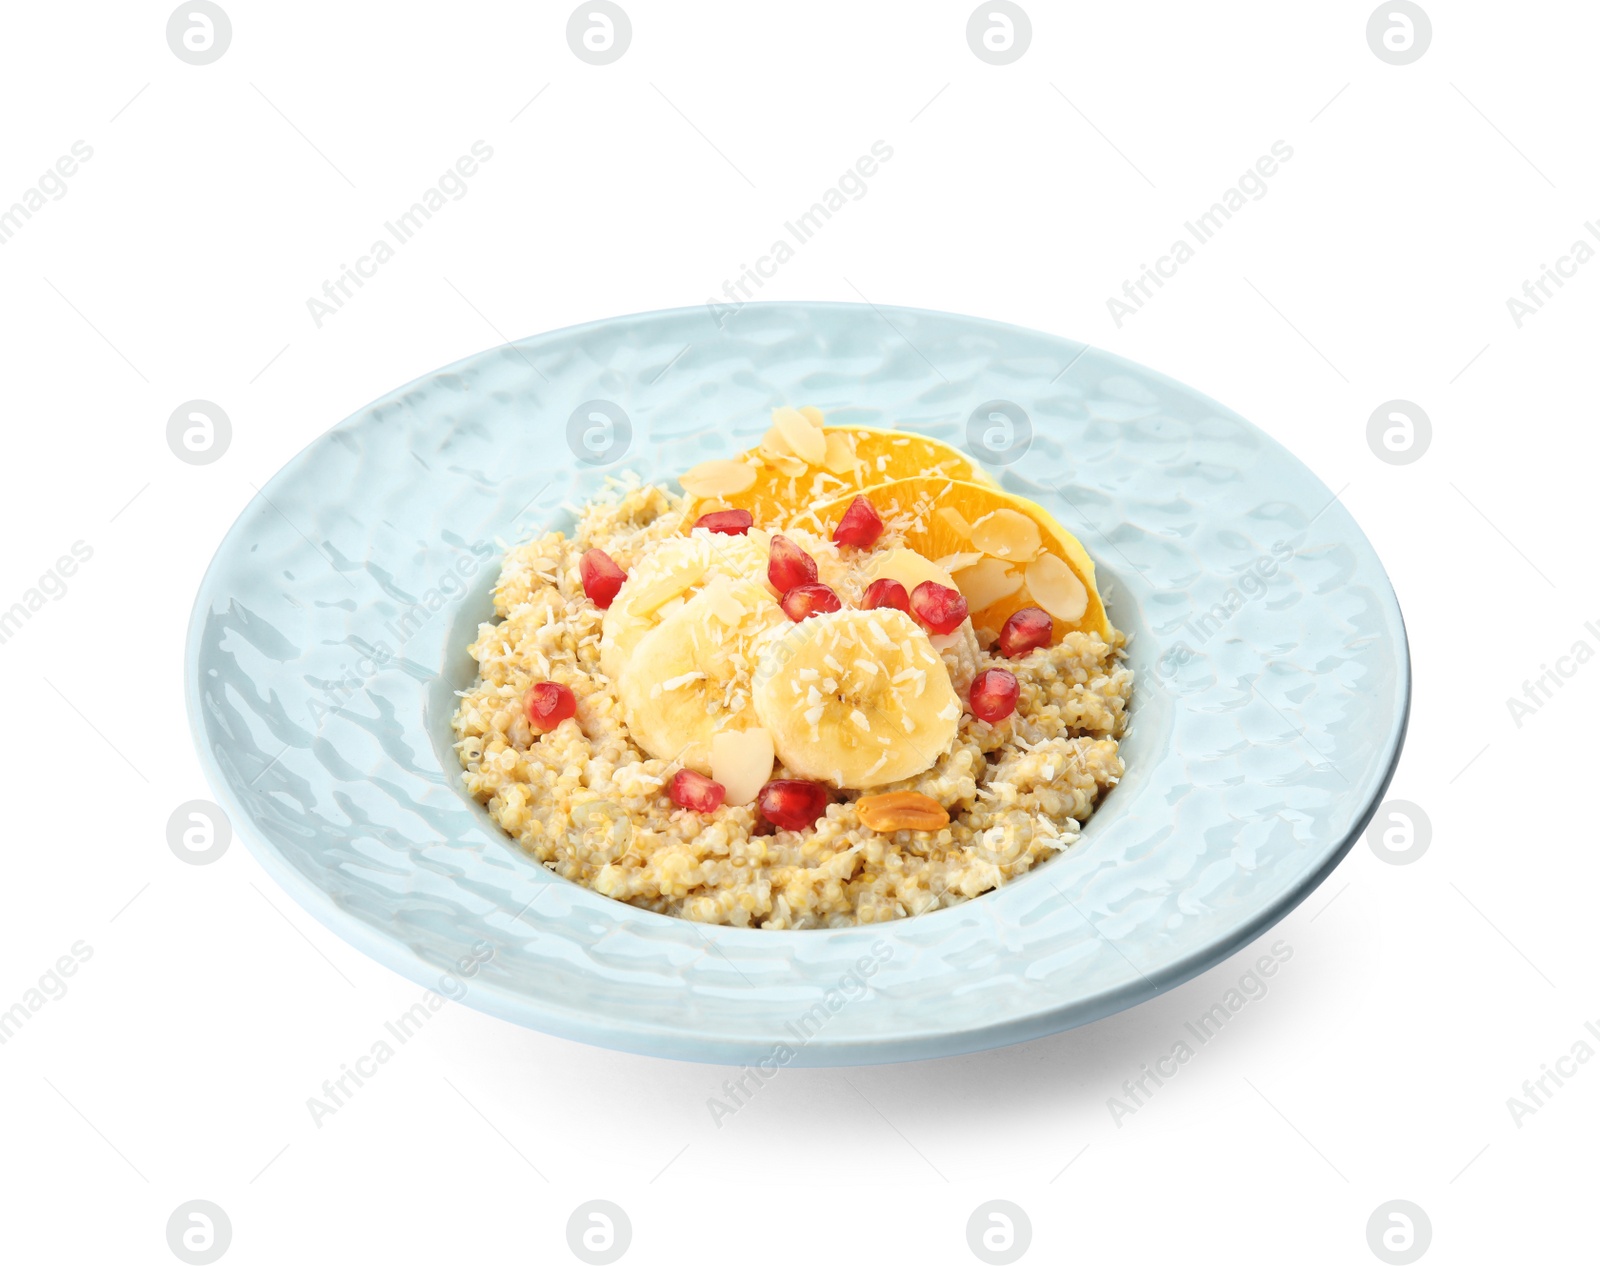 Photo of Plate of quinoa porridge with orange, banana and pomegranate seeds on white background